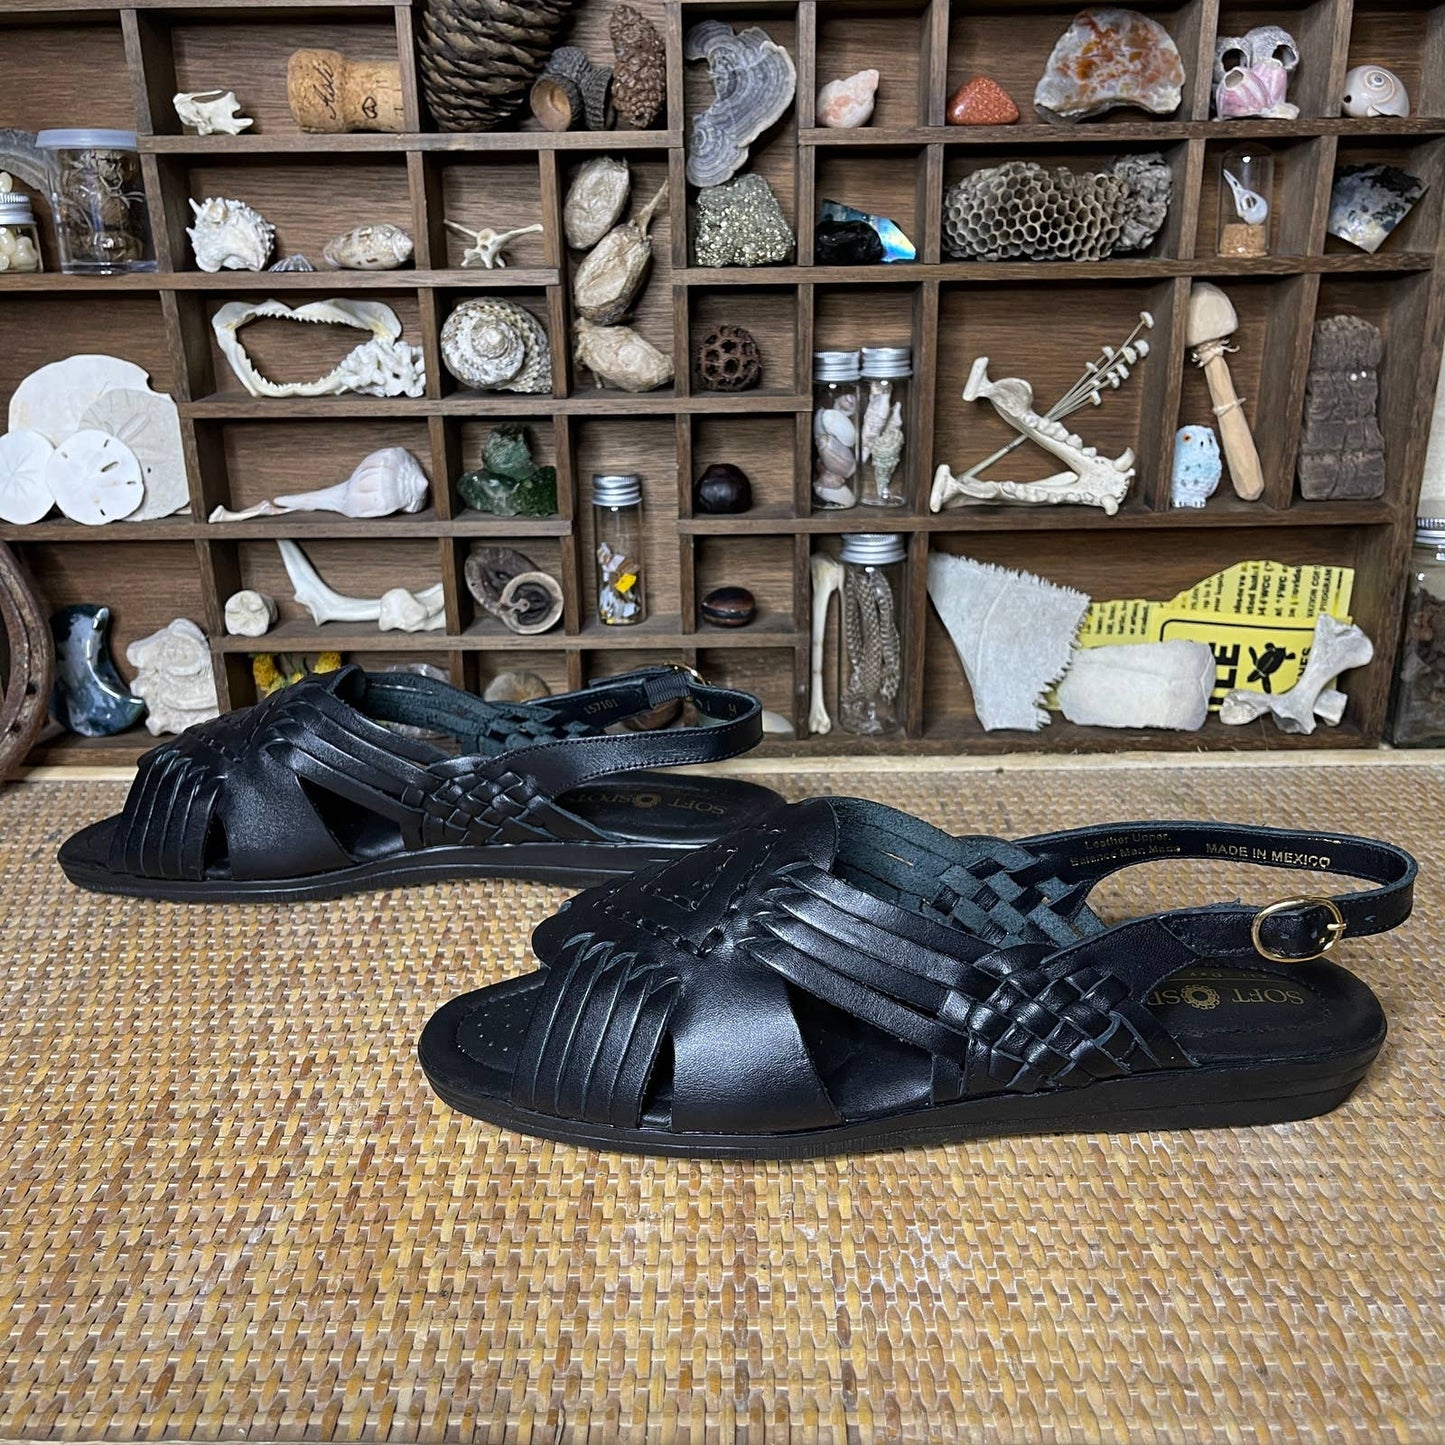 Vintage 90s Black Leather Huarache Sandals Open Toe by Soft Spots Size 11